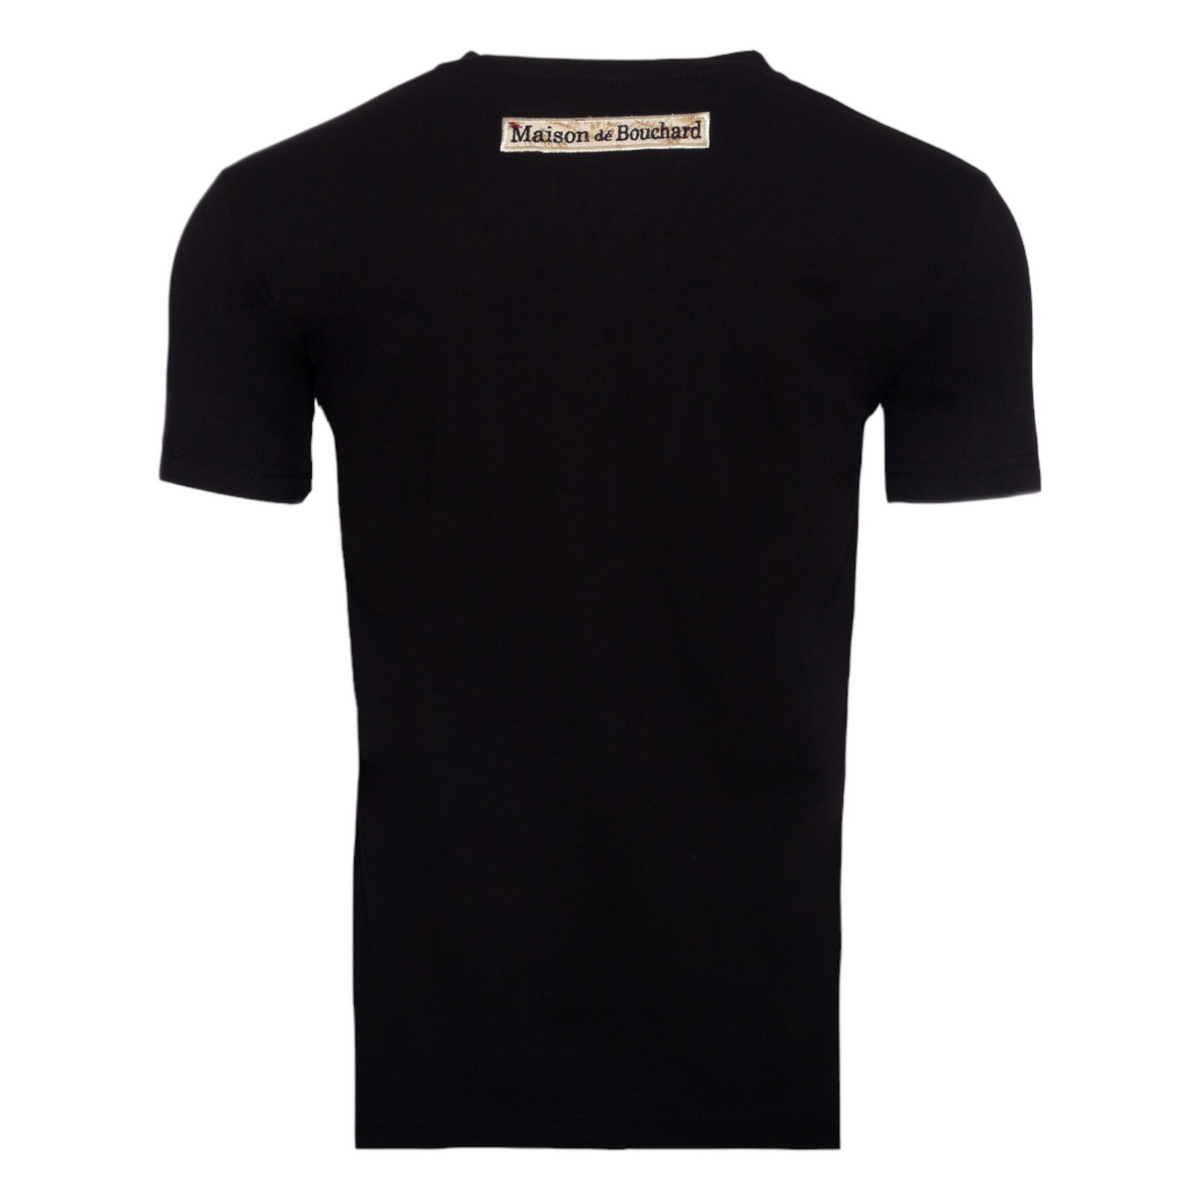 MDB Brand Men's Tapestry Logo T-Shirt - Black w/ Light Tapestry